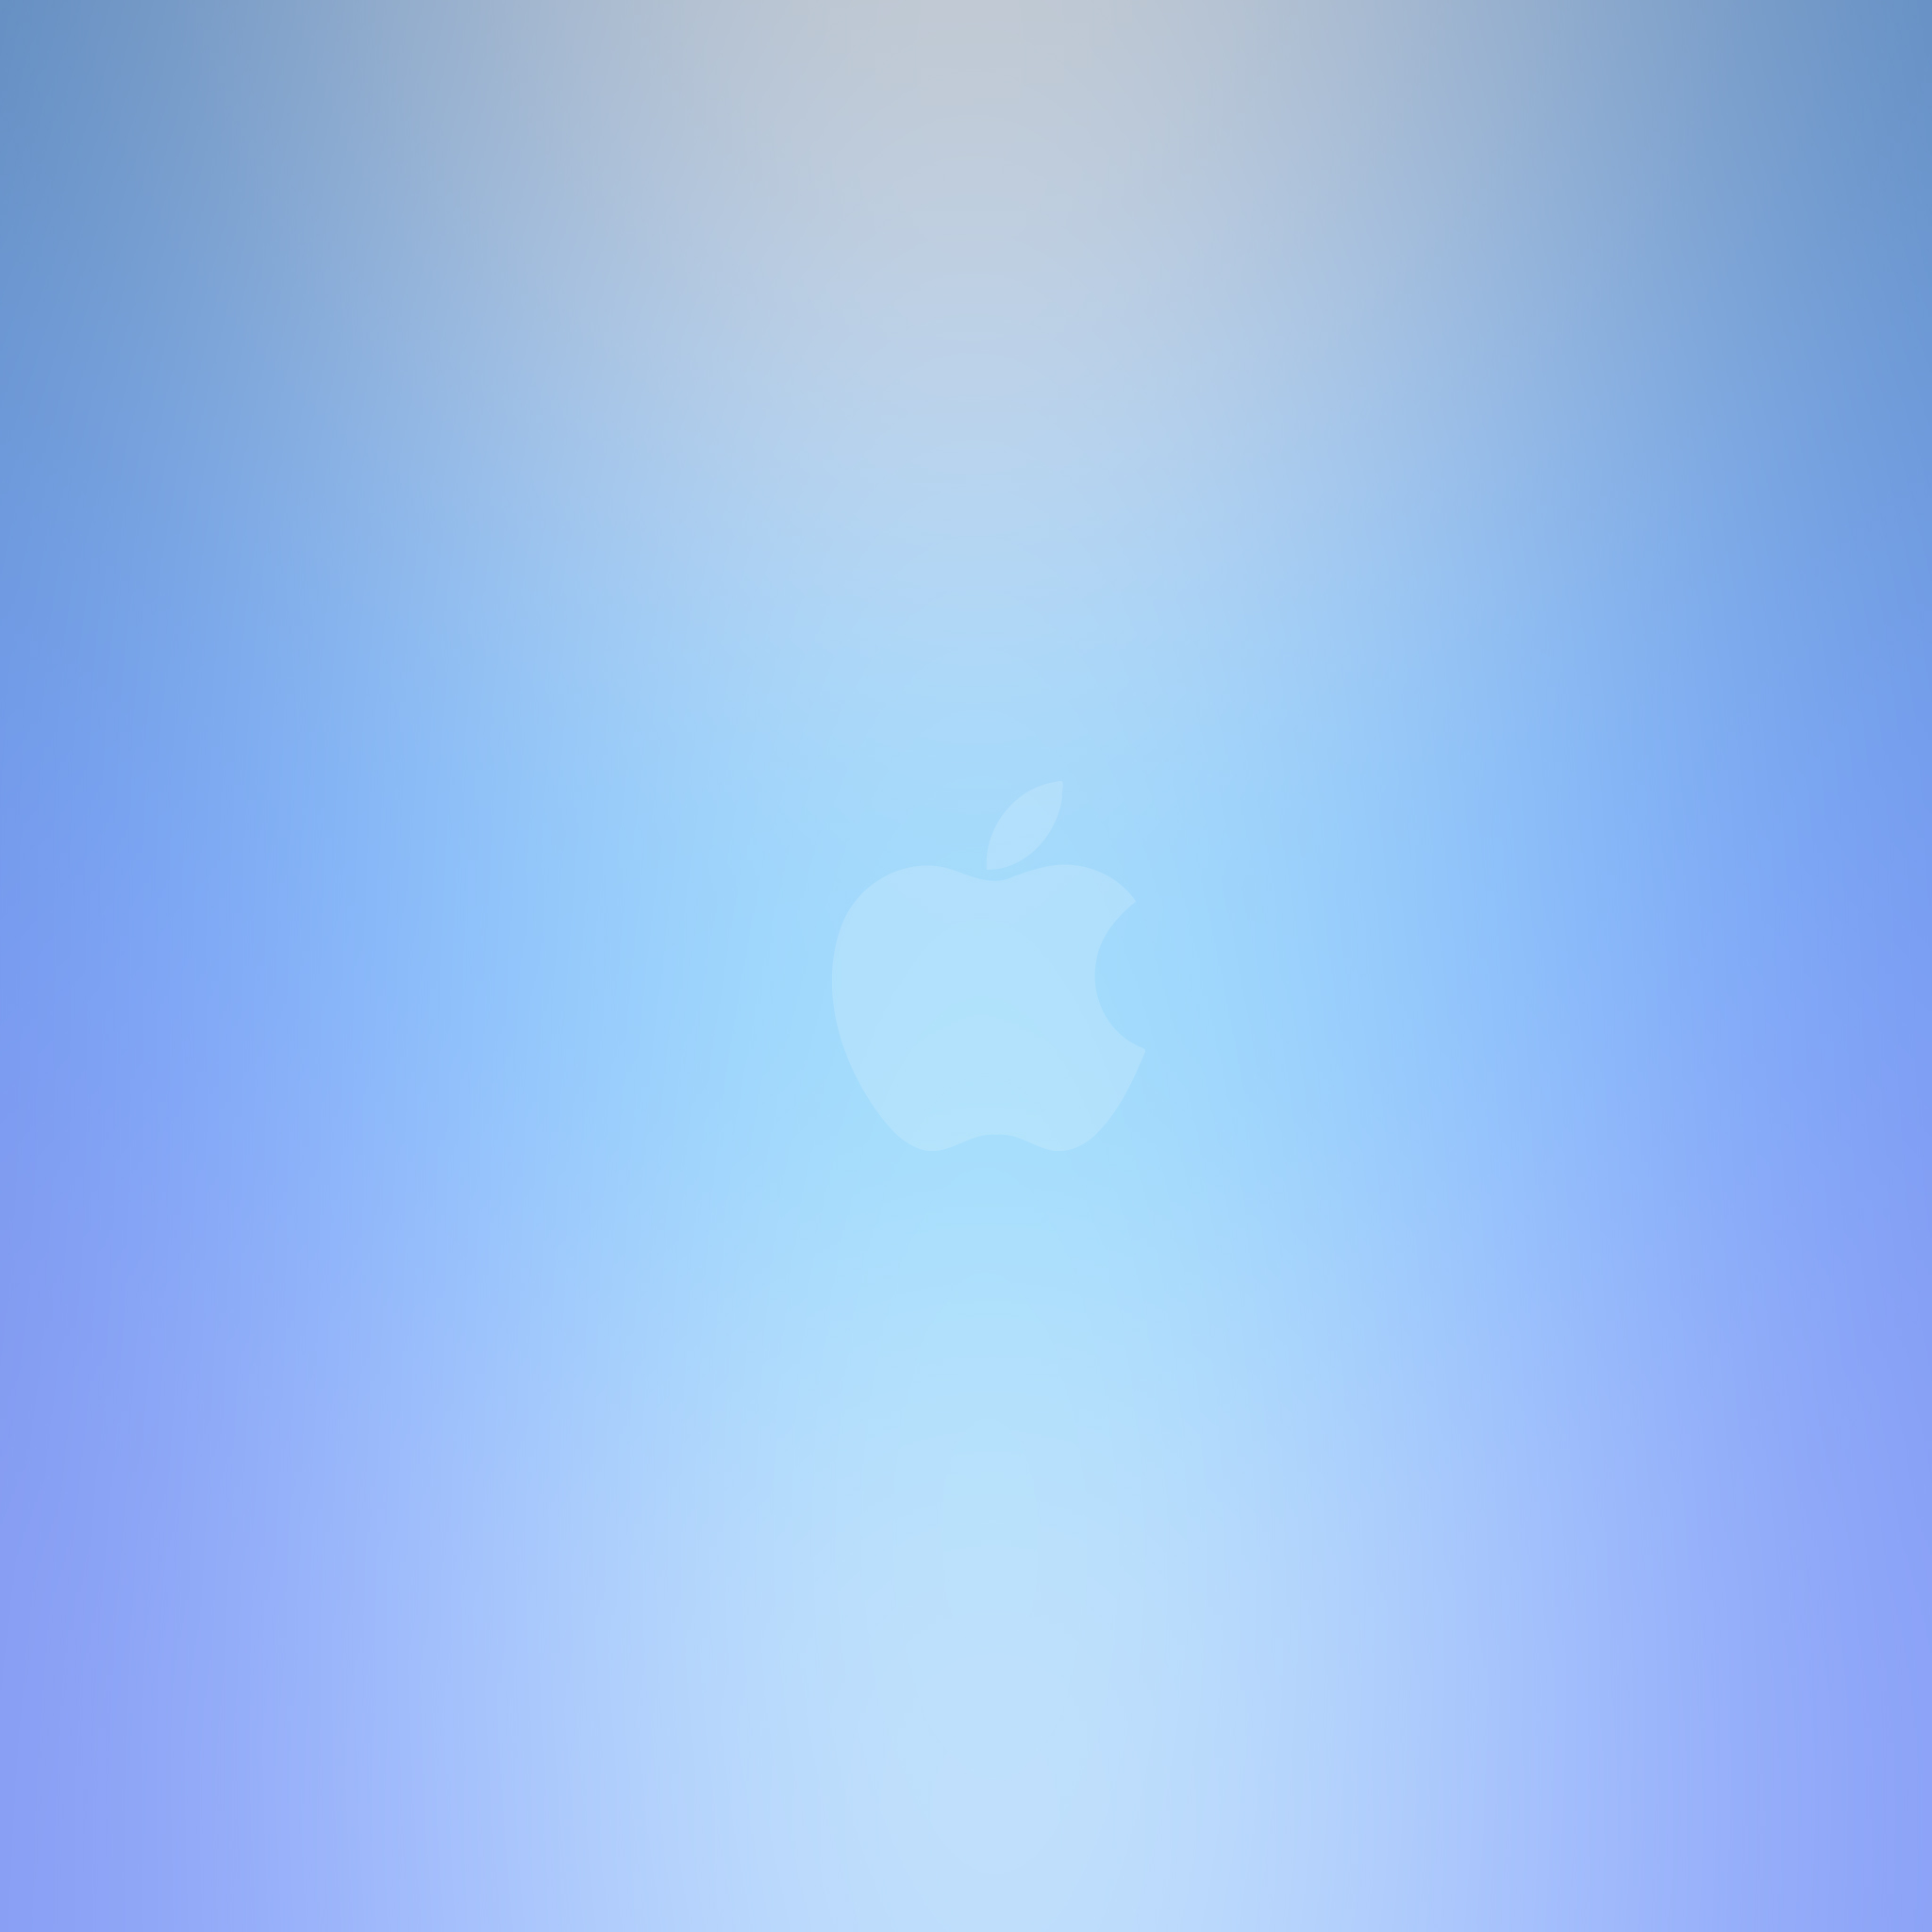 General 2048x2048 Apple Inc. minimalism gradient digital art simple background